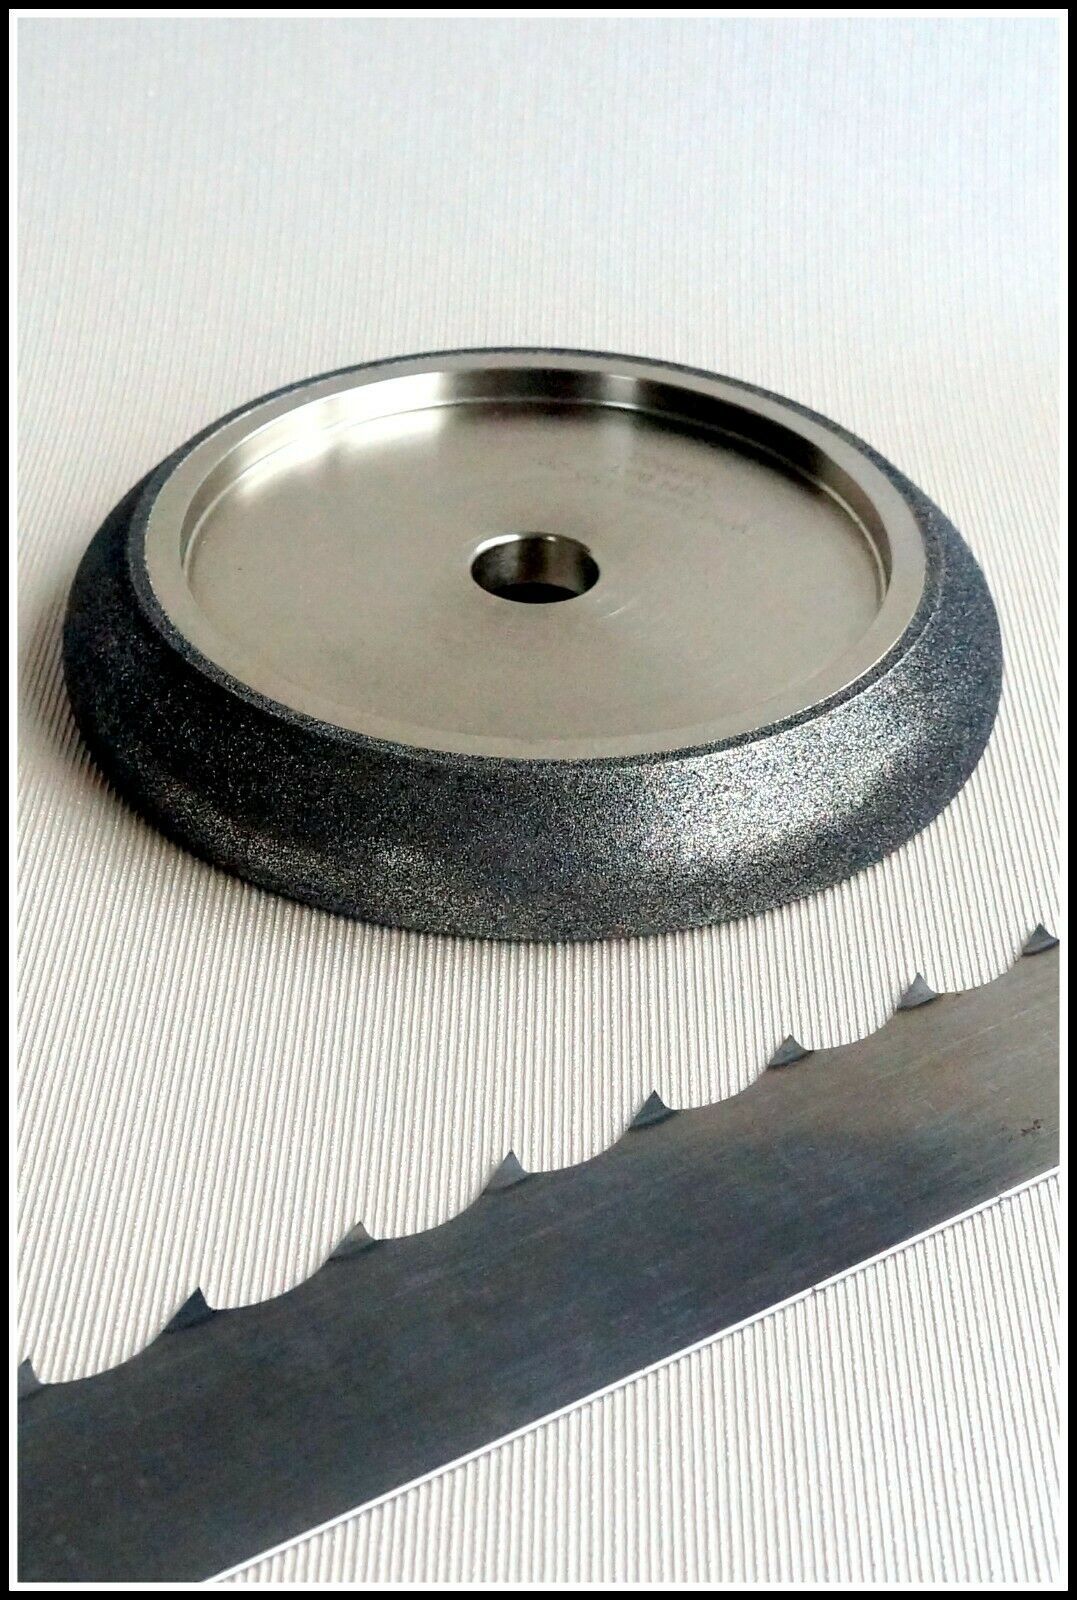 BAT Band saw CBN grinding wheel for Lenox Woodmaster bandsaw sharpening disc - $139.00 - $249.00